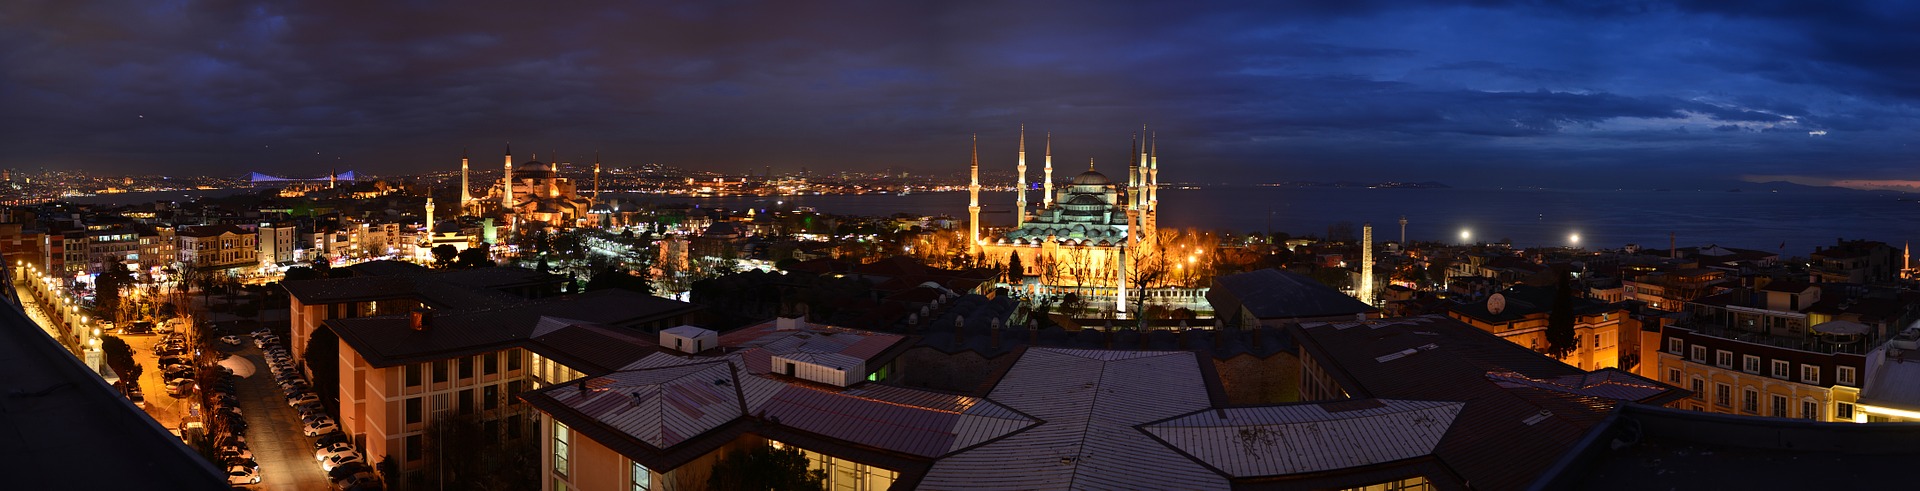 istanbul-908534_1920